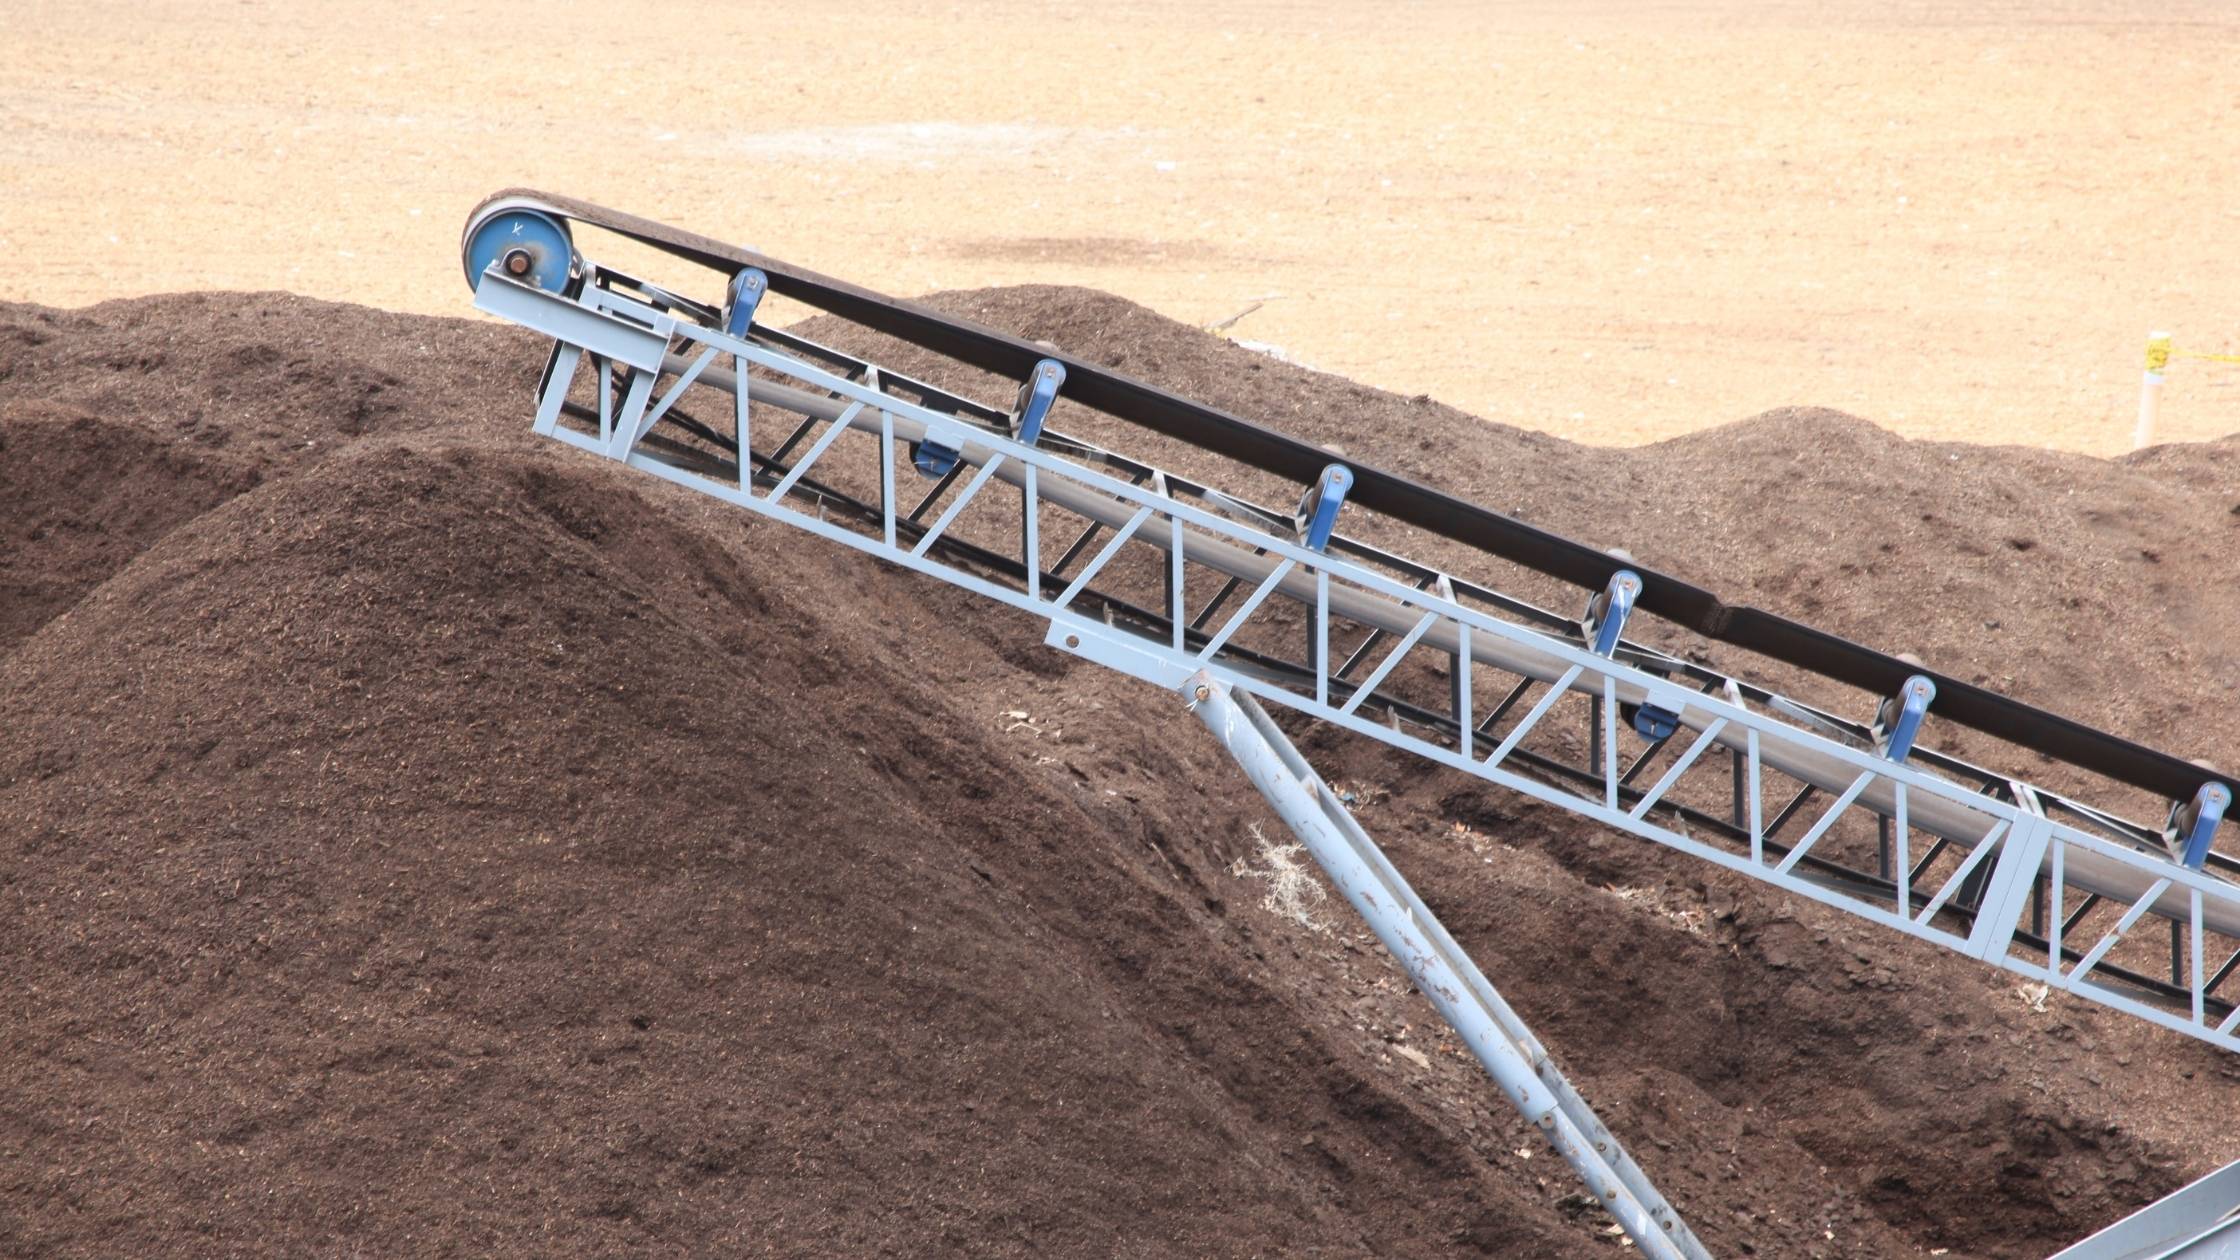 A conveyor belt transporting topsoil